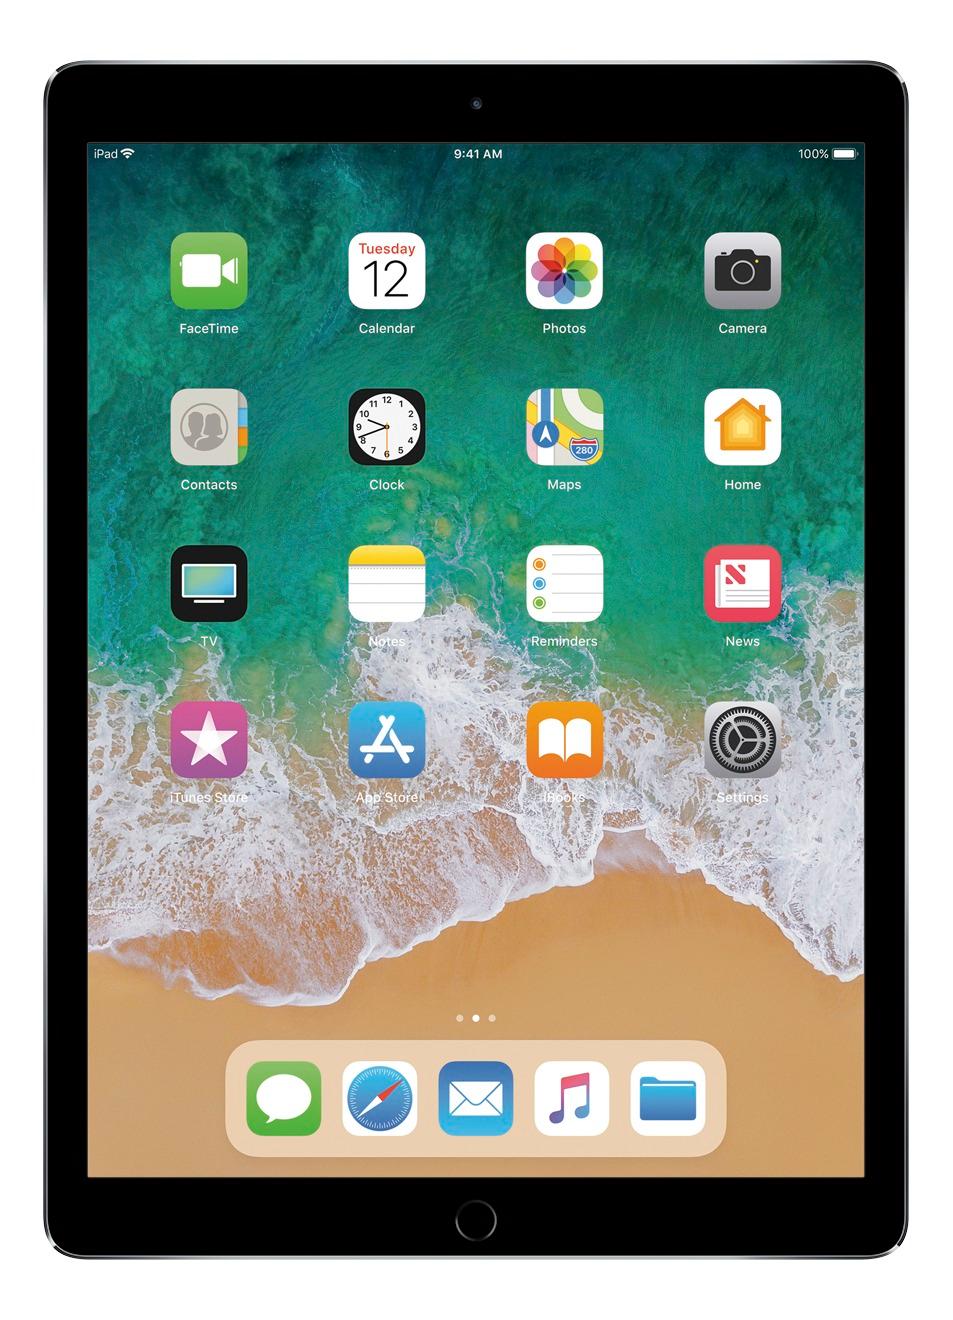  Apple iPad Pro (128 GB, Wi-Fi + Cellular, Space Gray